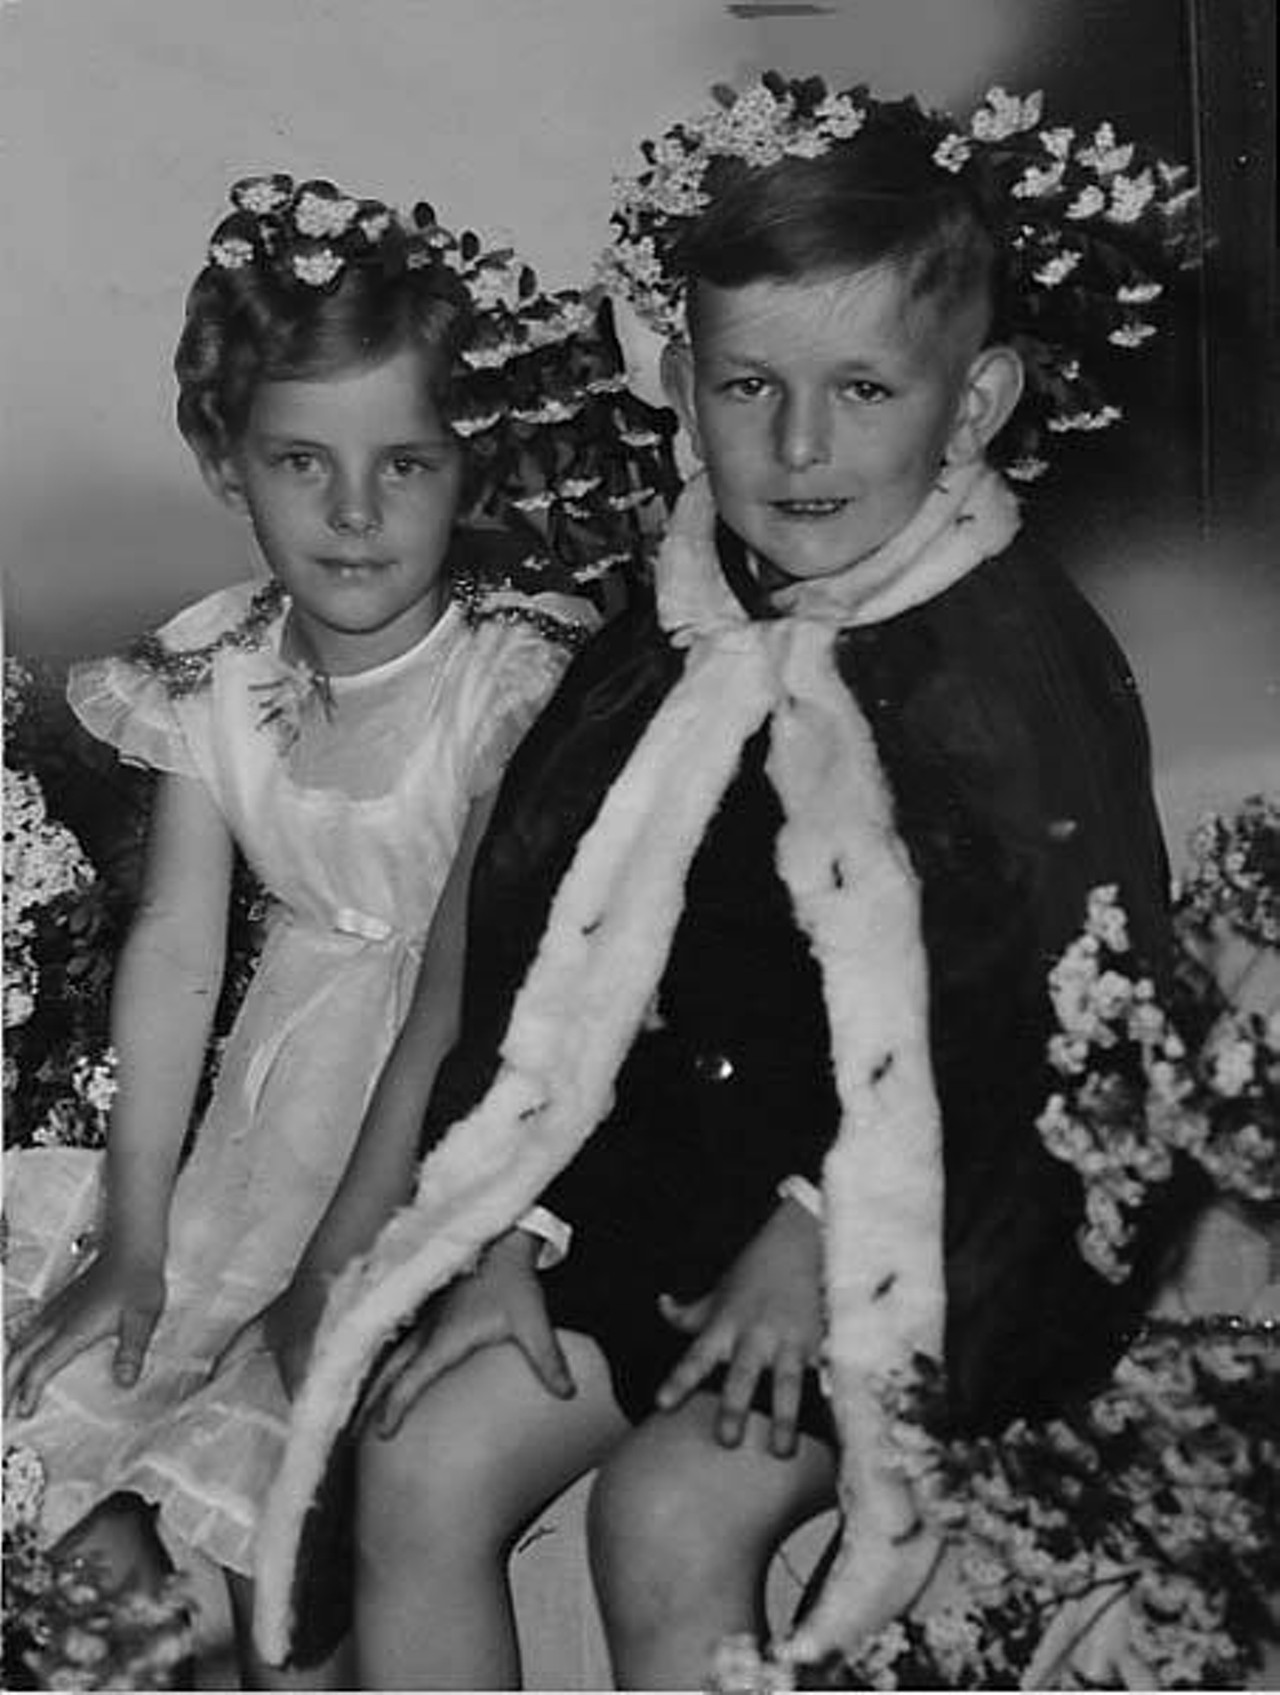 Children in costume at Ludlow School, 1936